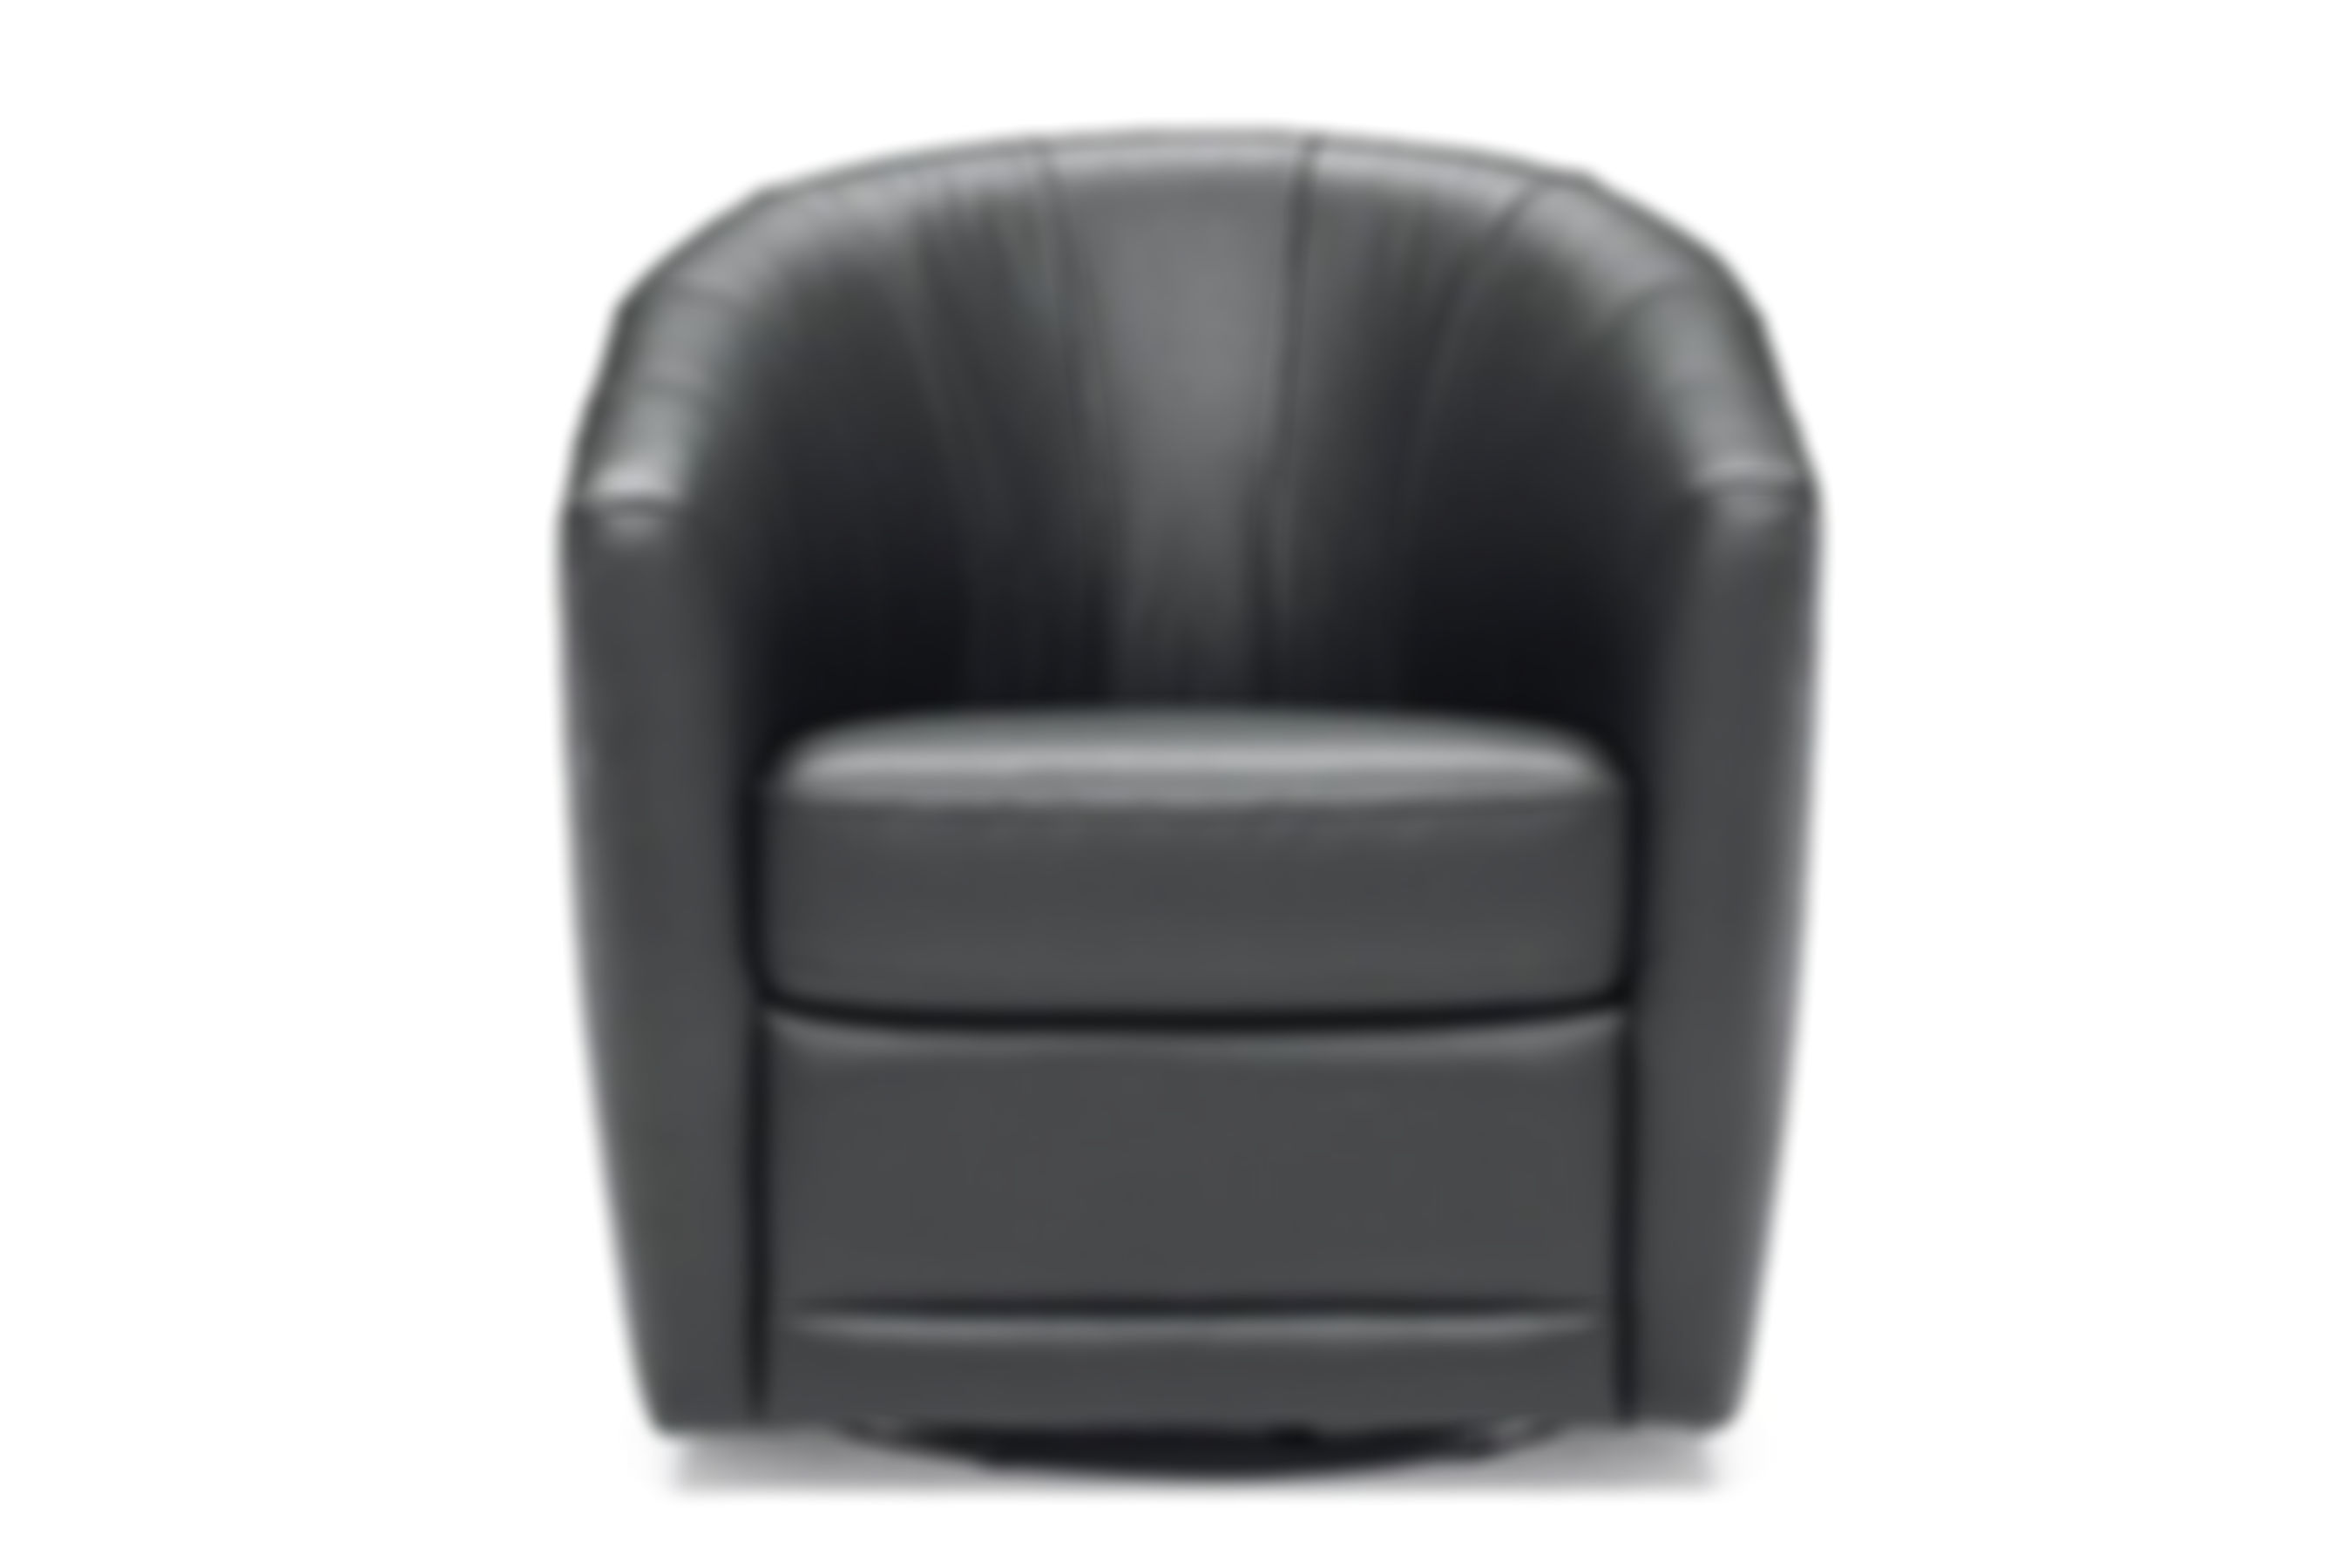 Giada B596 Top Grain Leather Barrel, Black Leather Barrel Chair